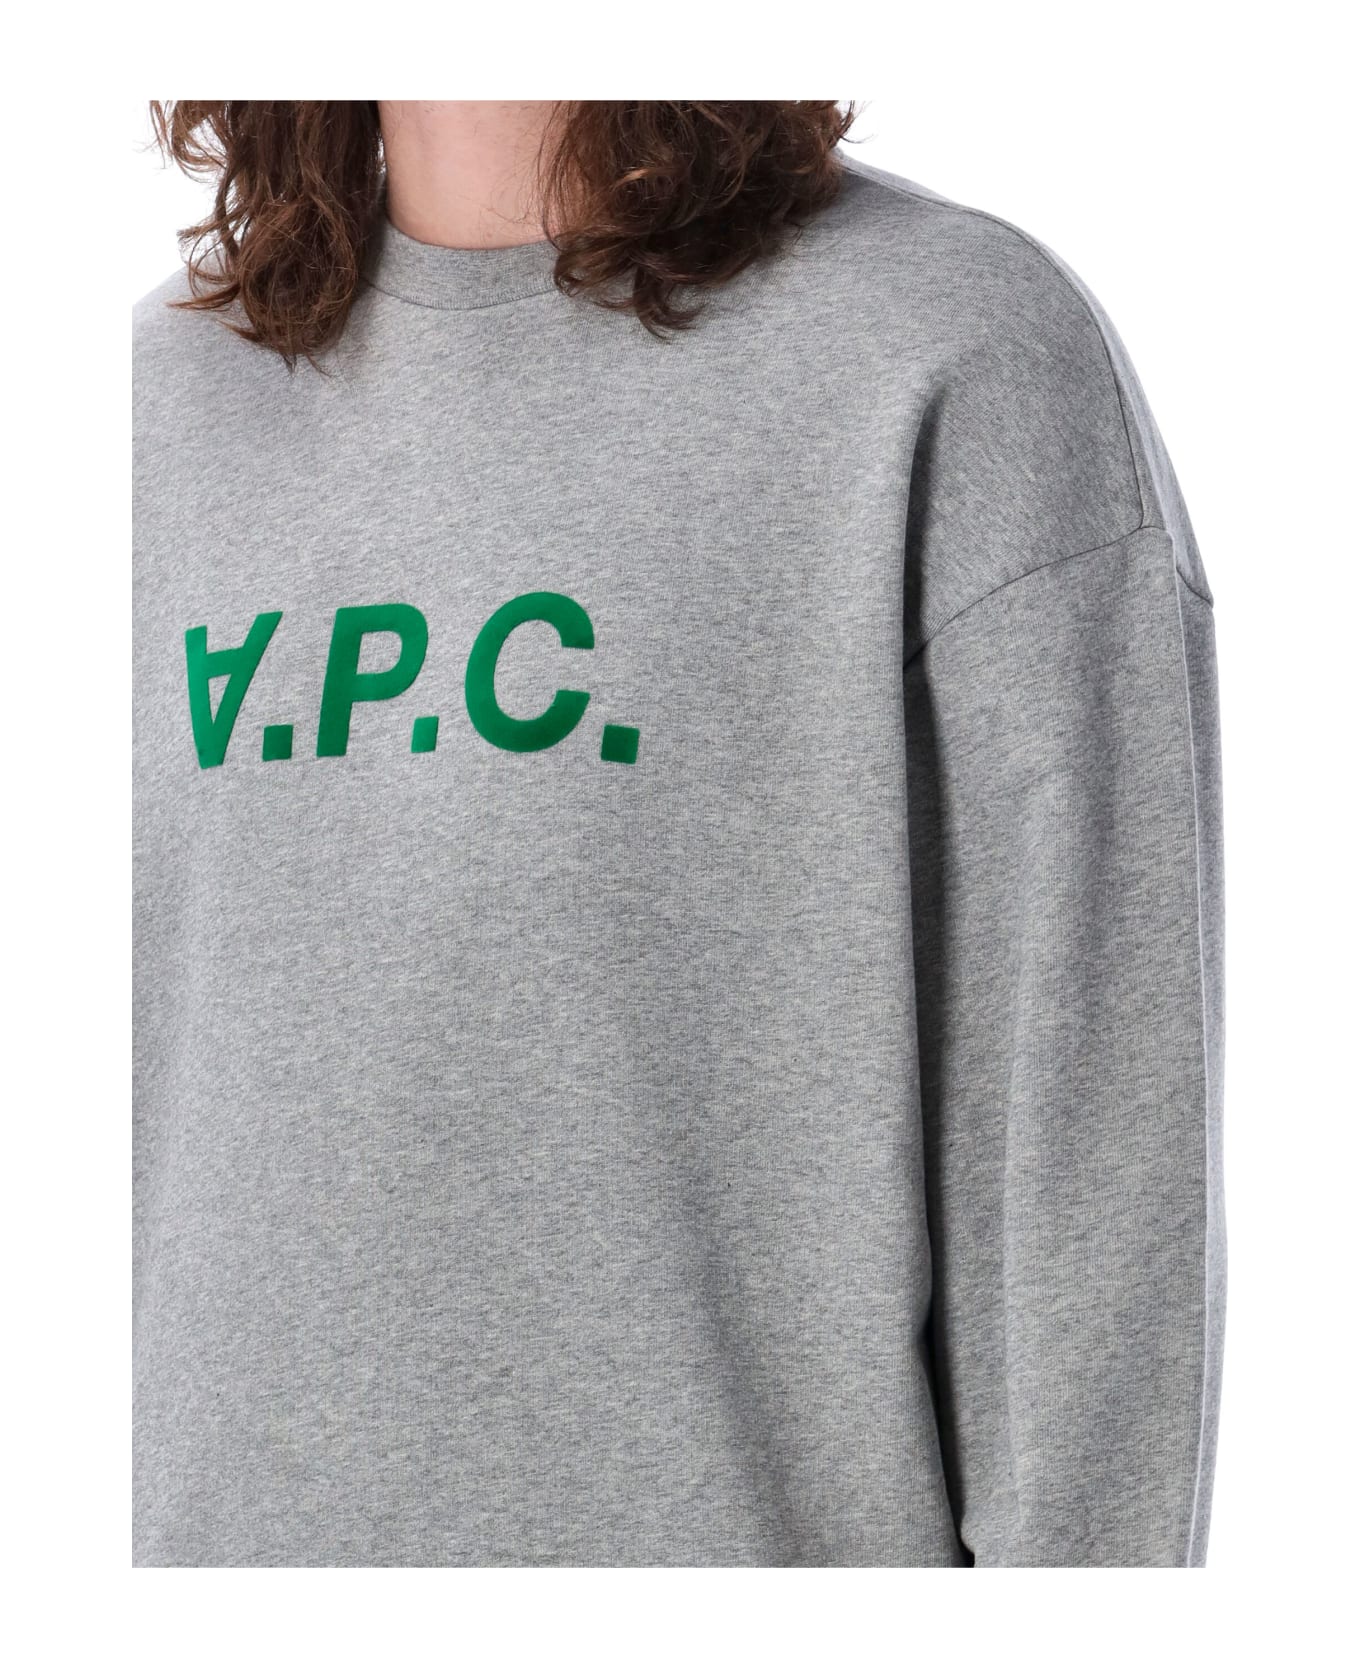 A.P.C. Vpc Sweatshirt - GREY MEL GREEN